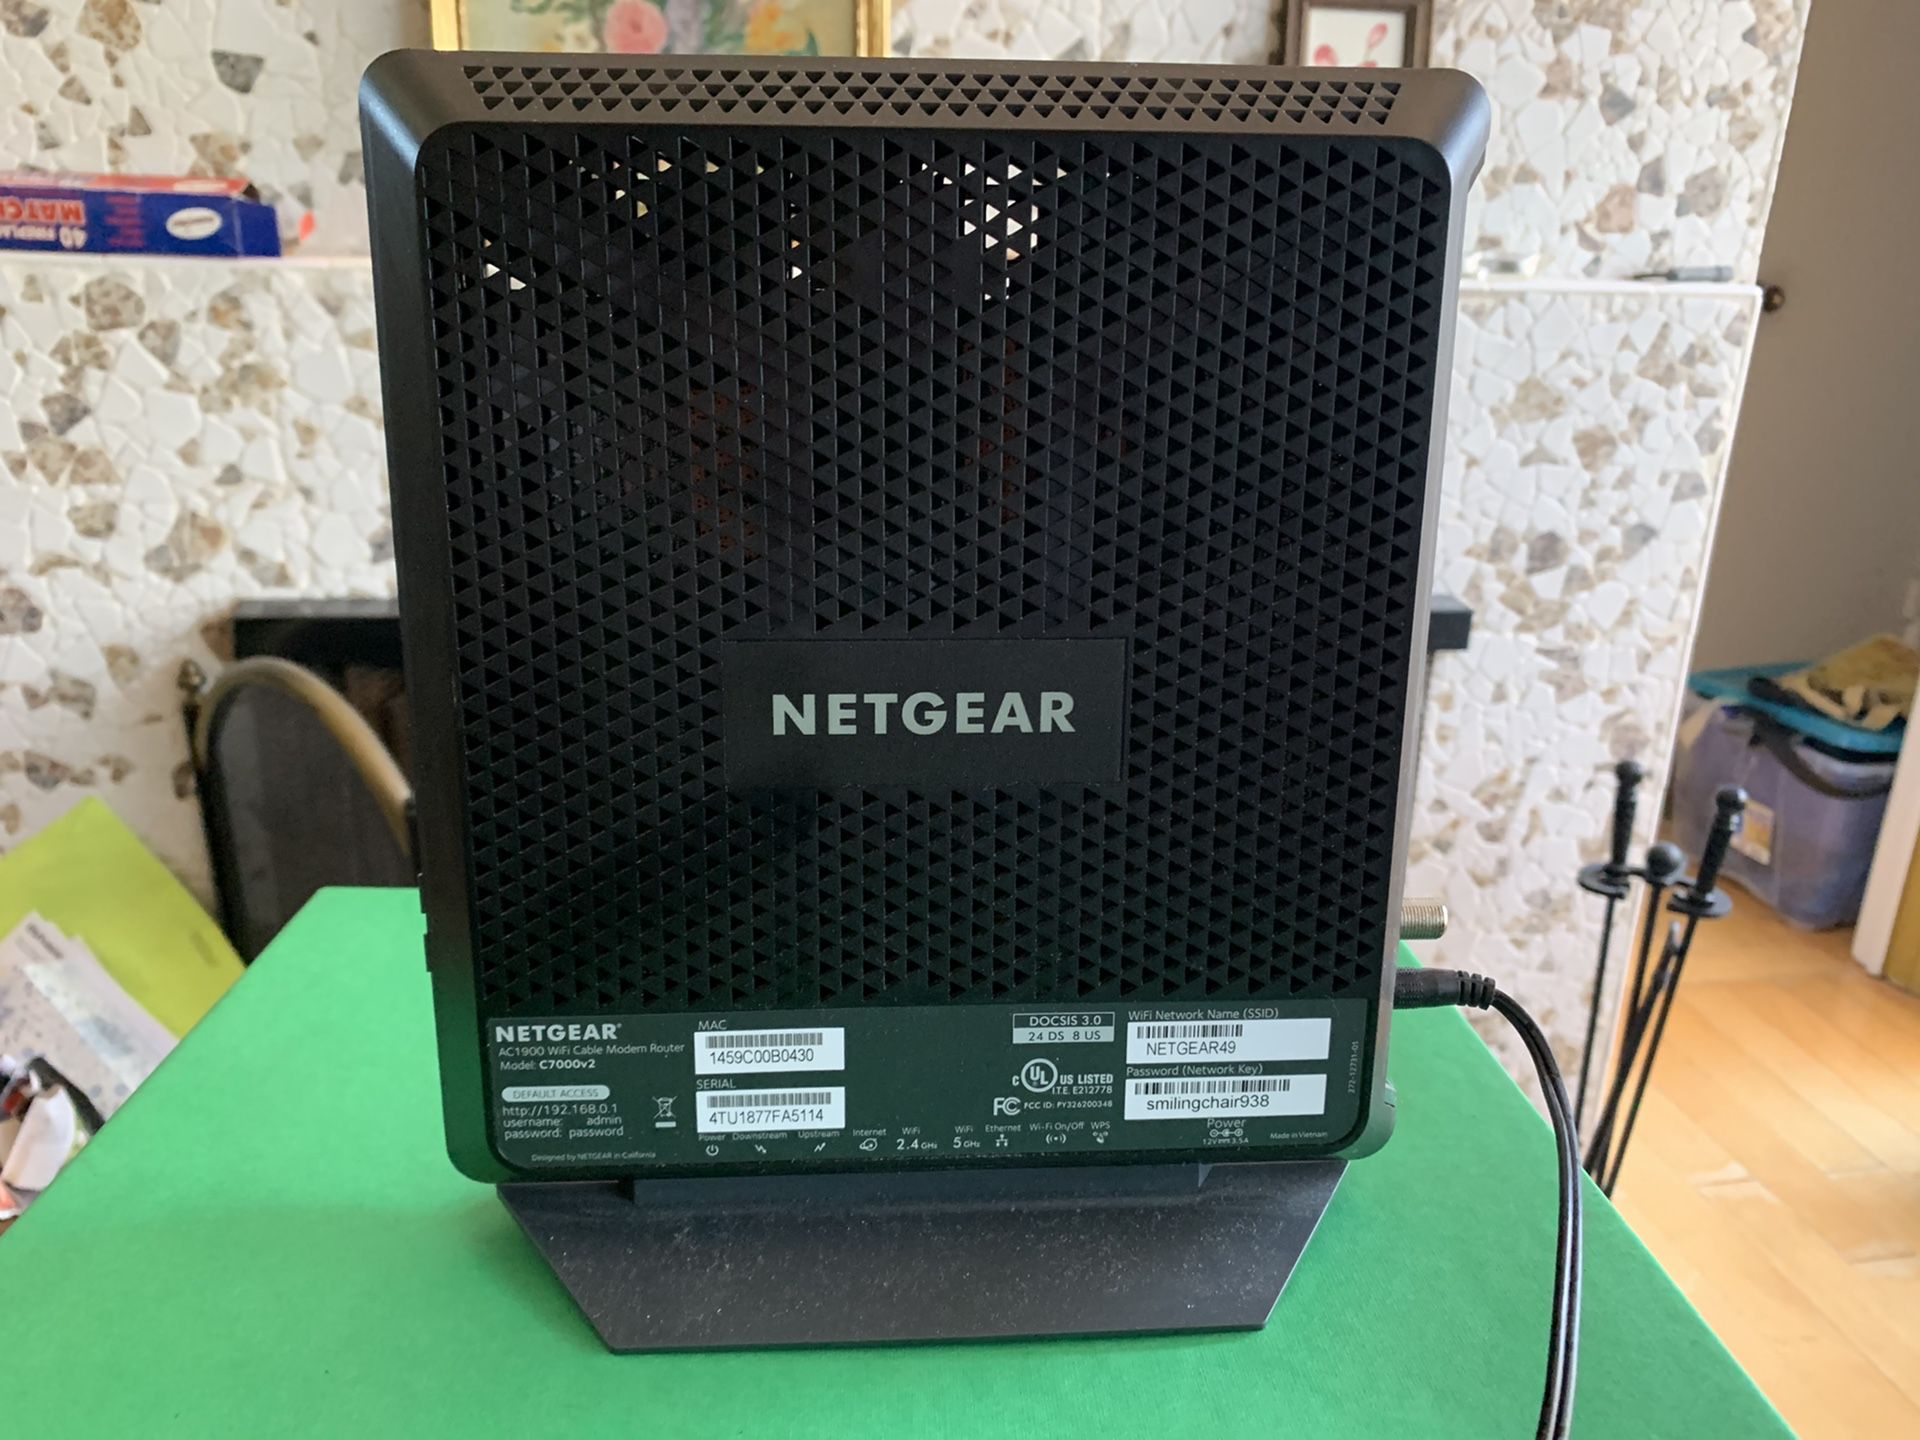 Netgear Nighthawk Cable Modem/Router